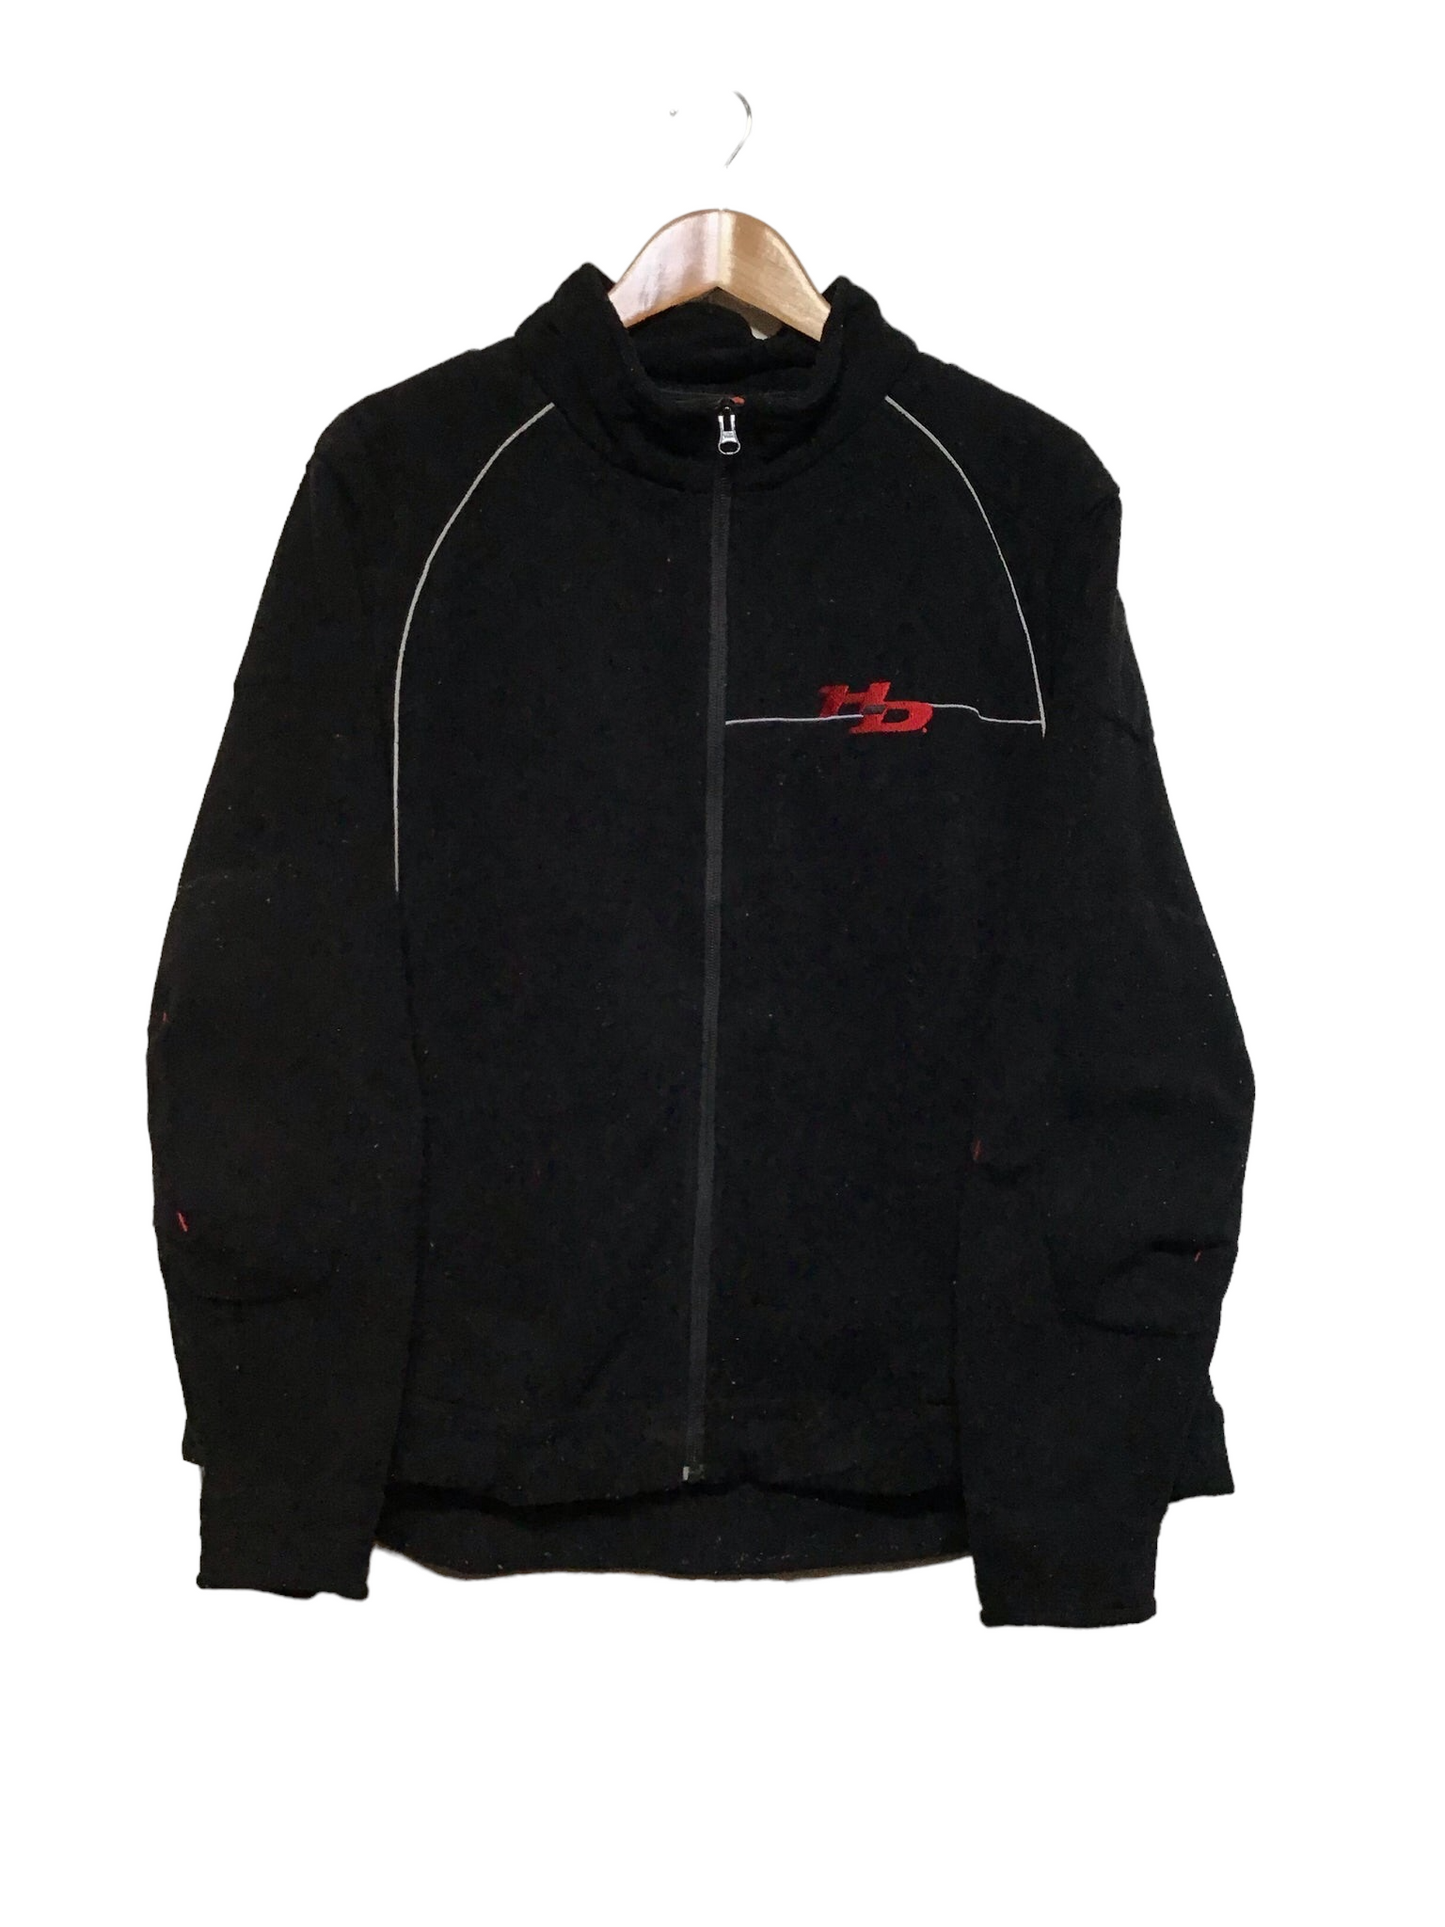 Harley Davidson Fleece Jacket (Size L)